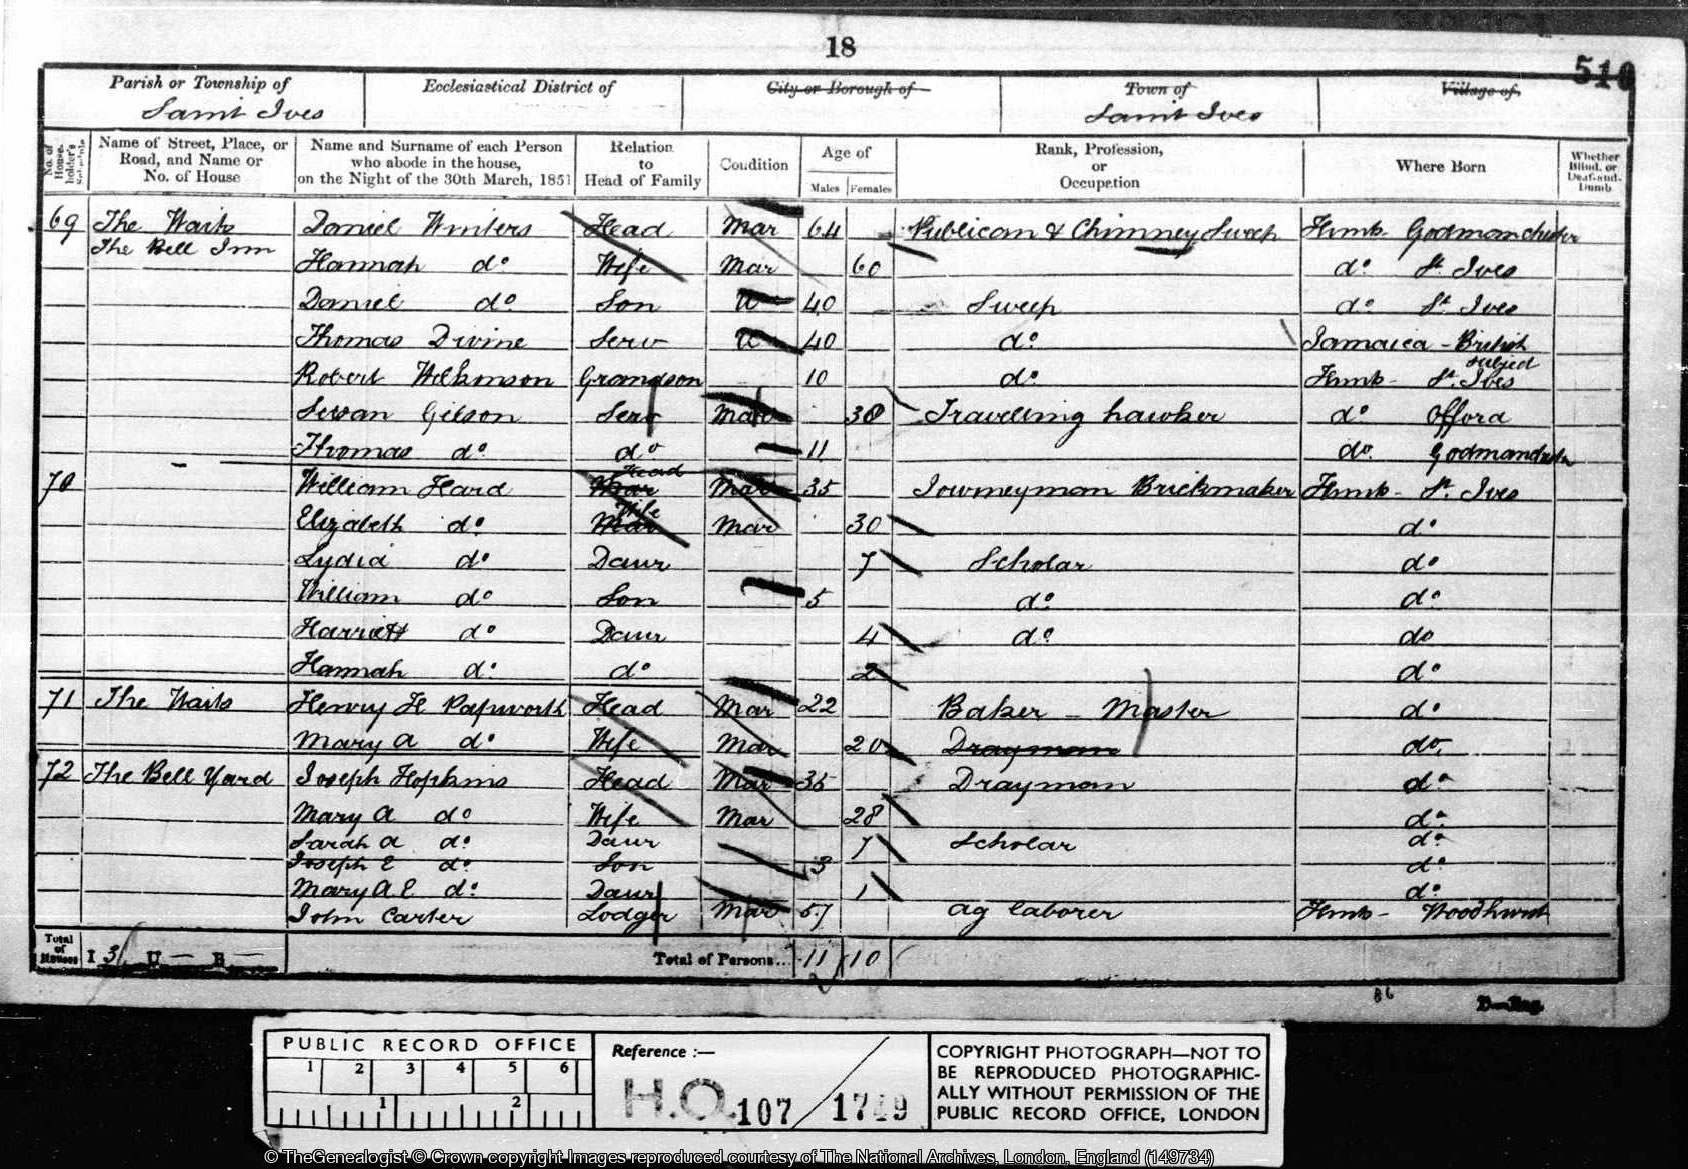 1851 Census of the Bell Inn St Ives, Cambridgeshire where Joe's chimney sweep ancestors lived